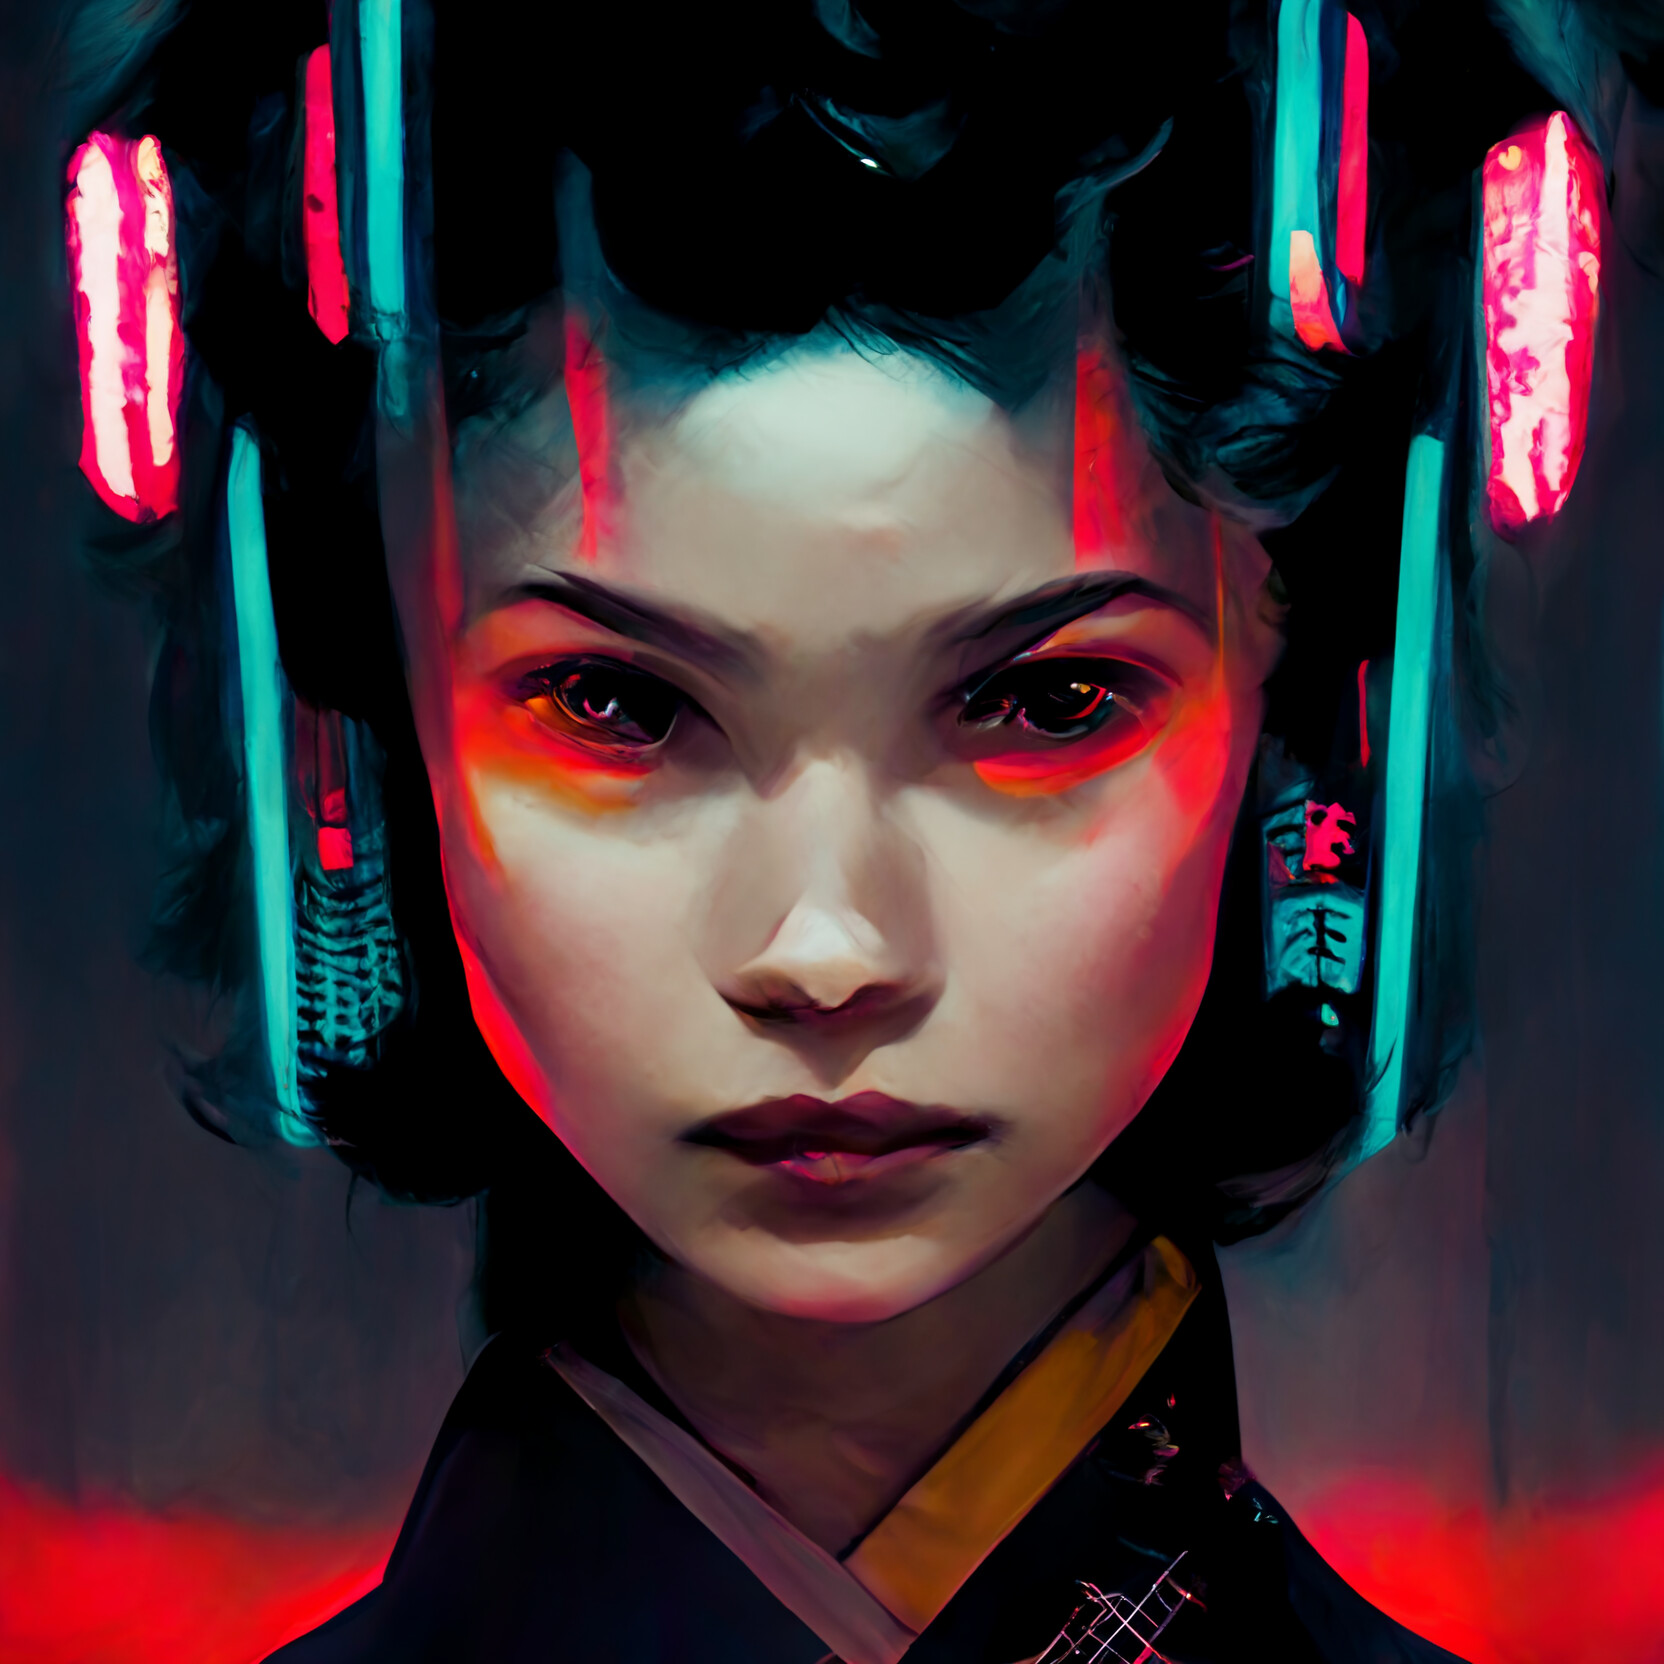 ArtStation - Cyberpunk Samurai | Artworks